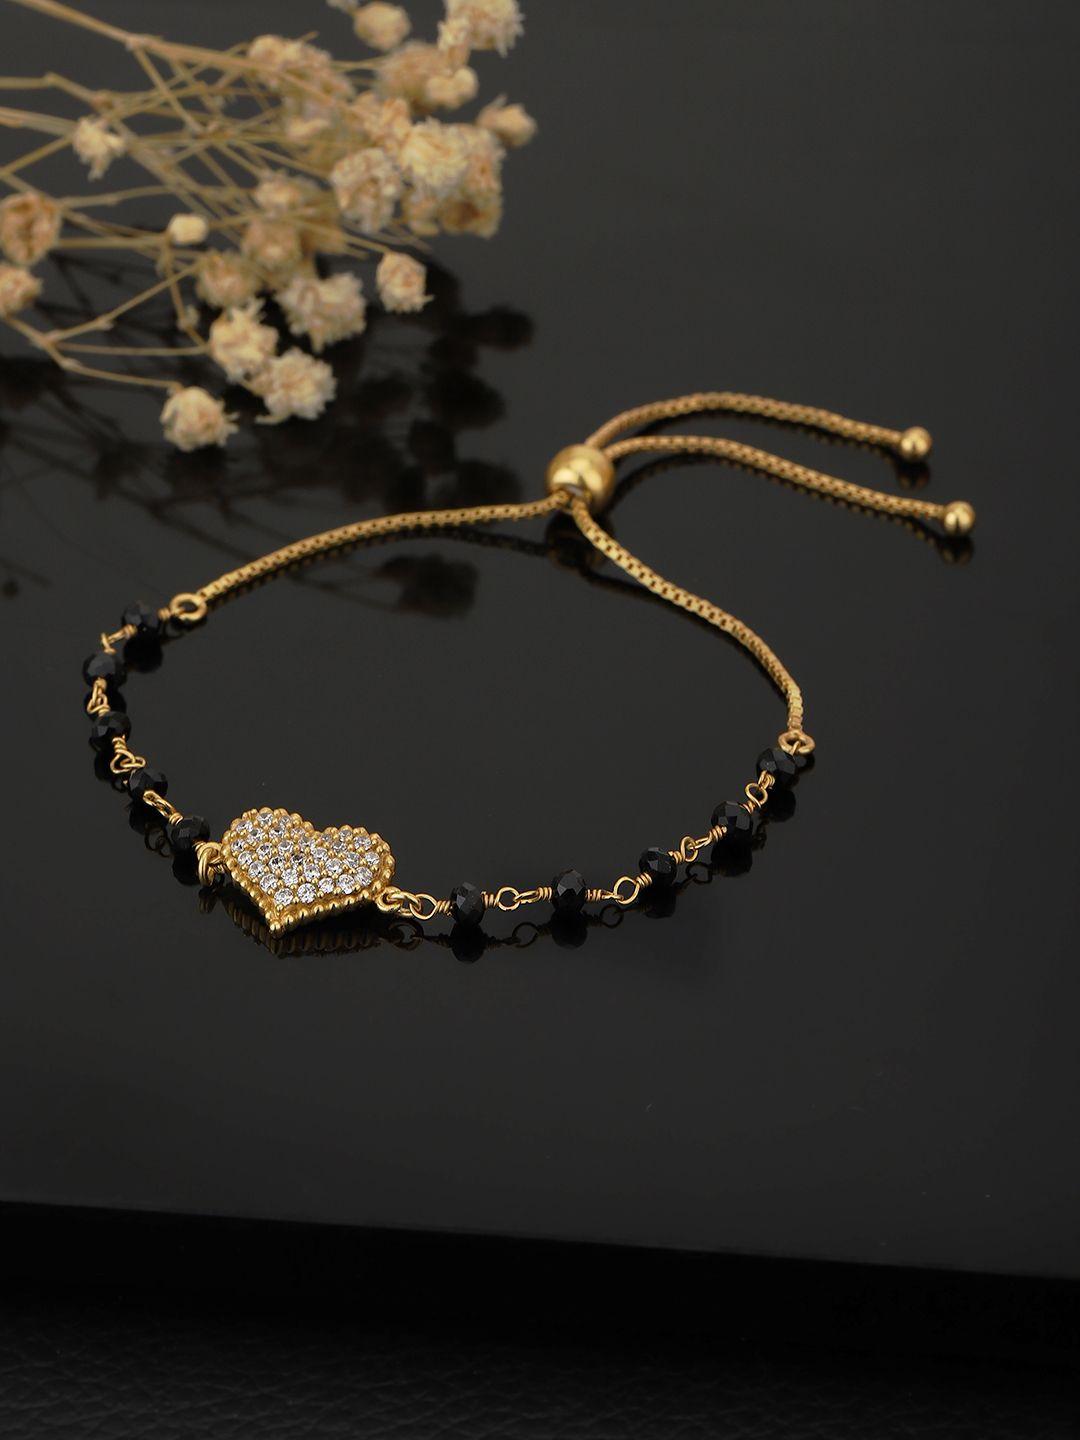 carlton london gold-plated black cz studded handcrafted bracelet